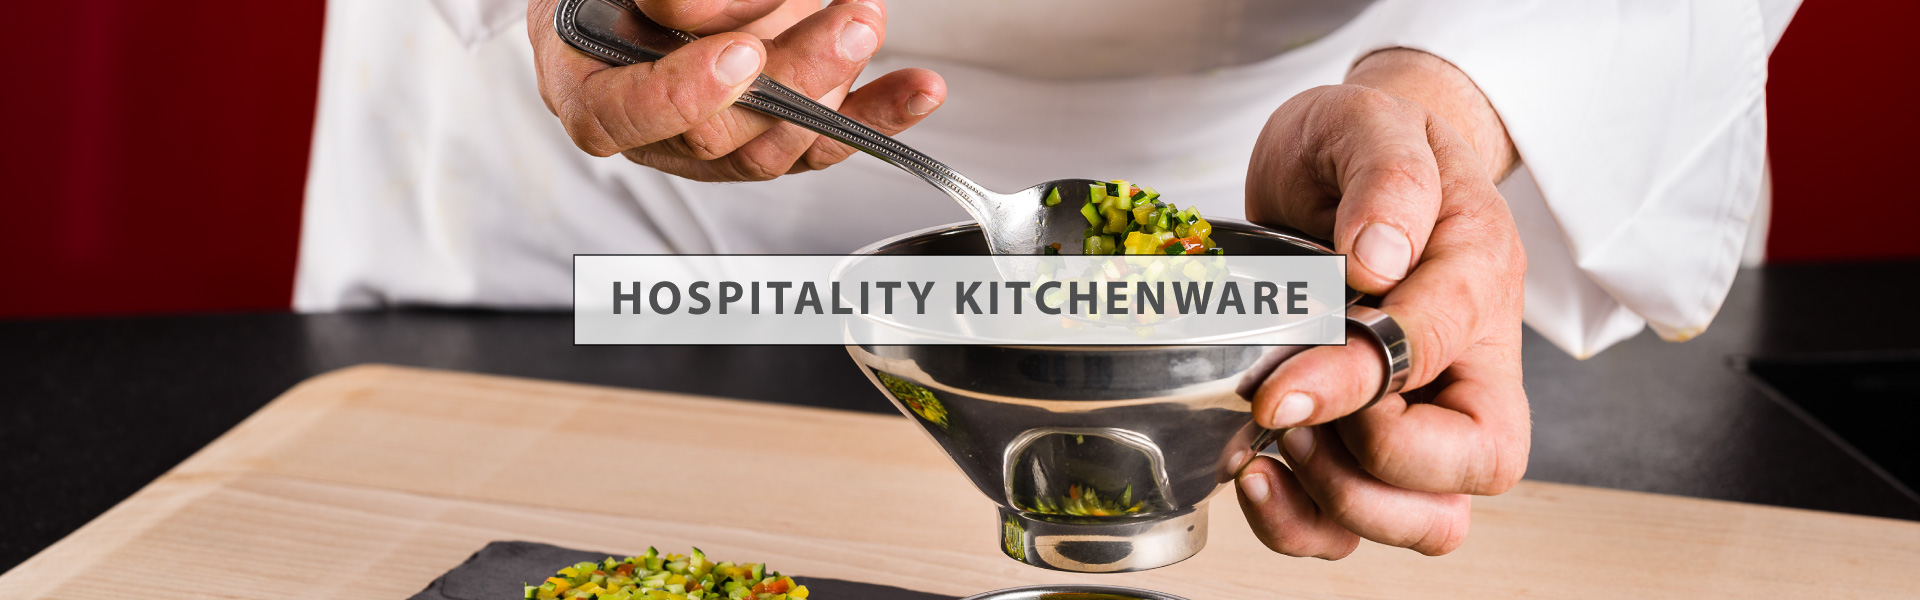 Buy Hospitality Kitchenware   Banks Kitchen Shop